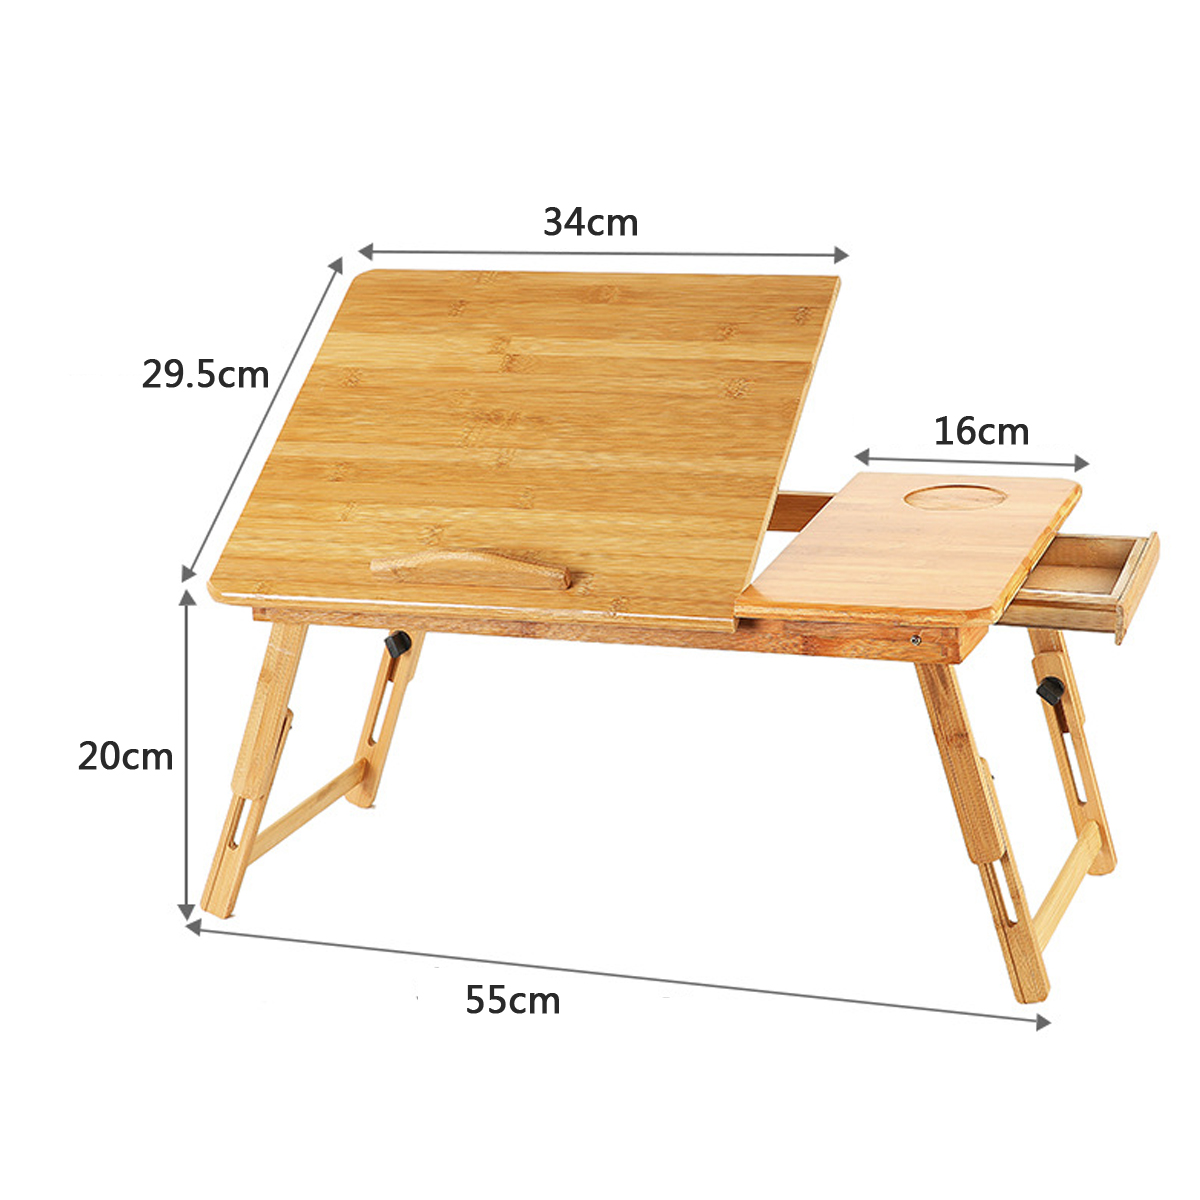 Adjustable-Laptop-Desk-Large-Bed-Tray-Tilting-Top-Foldable-Table-Multi-tasking-Stand-Breakfast-Servi-1547679-5